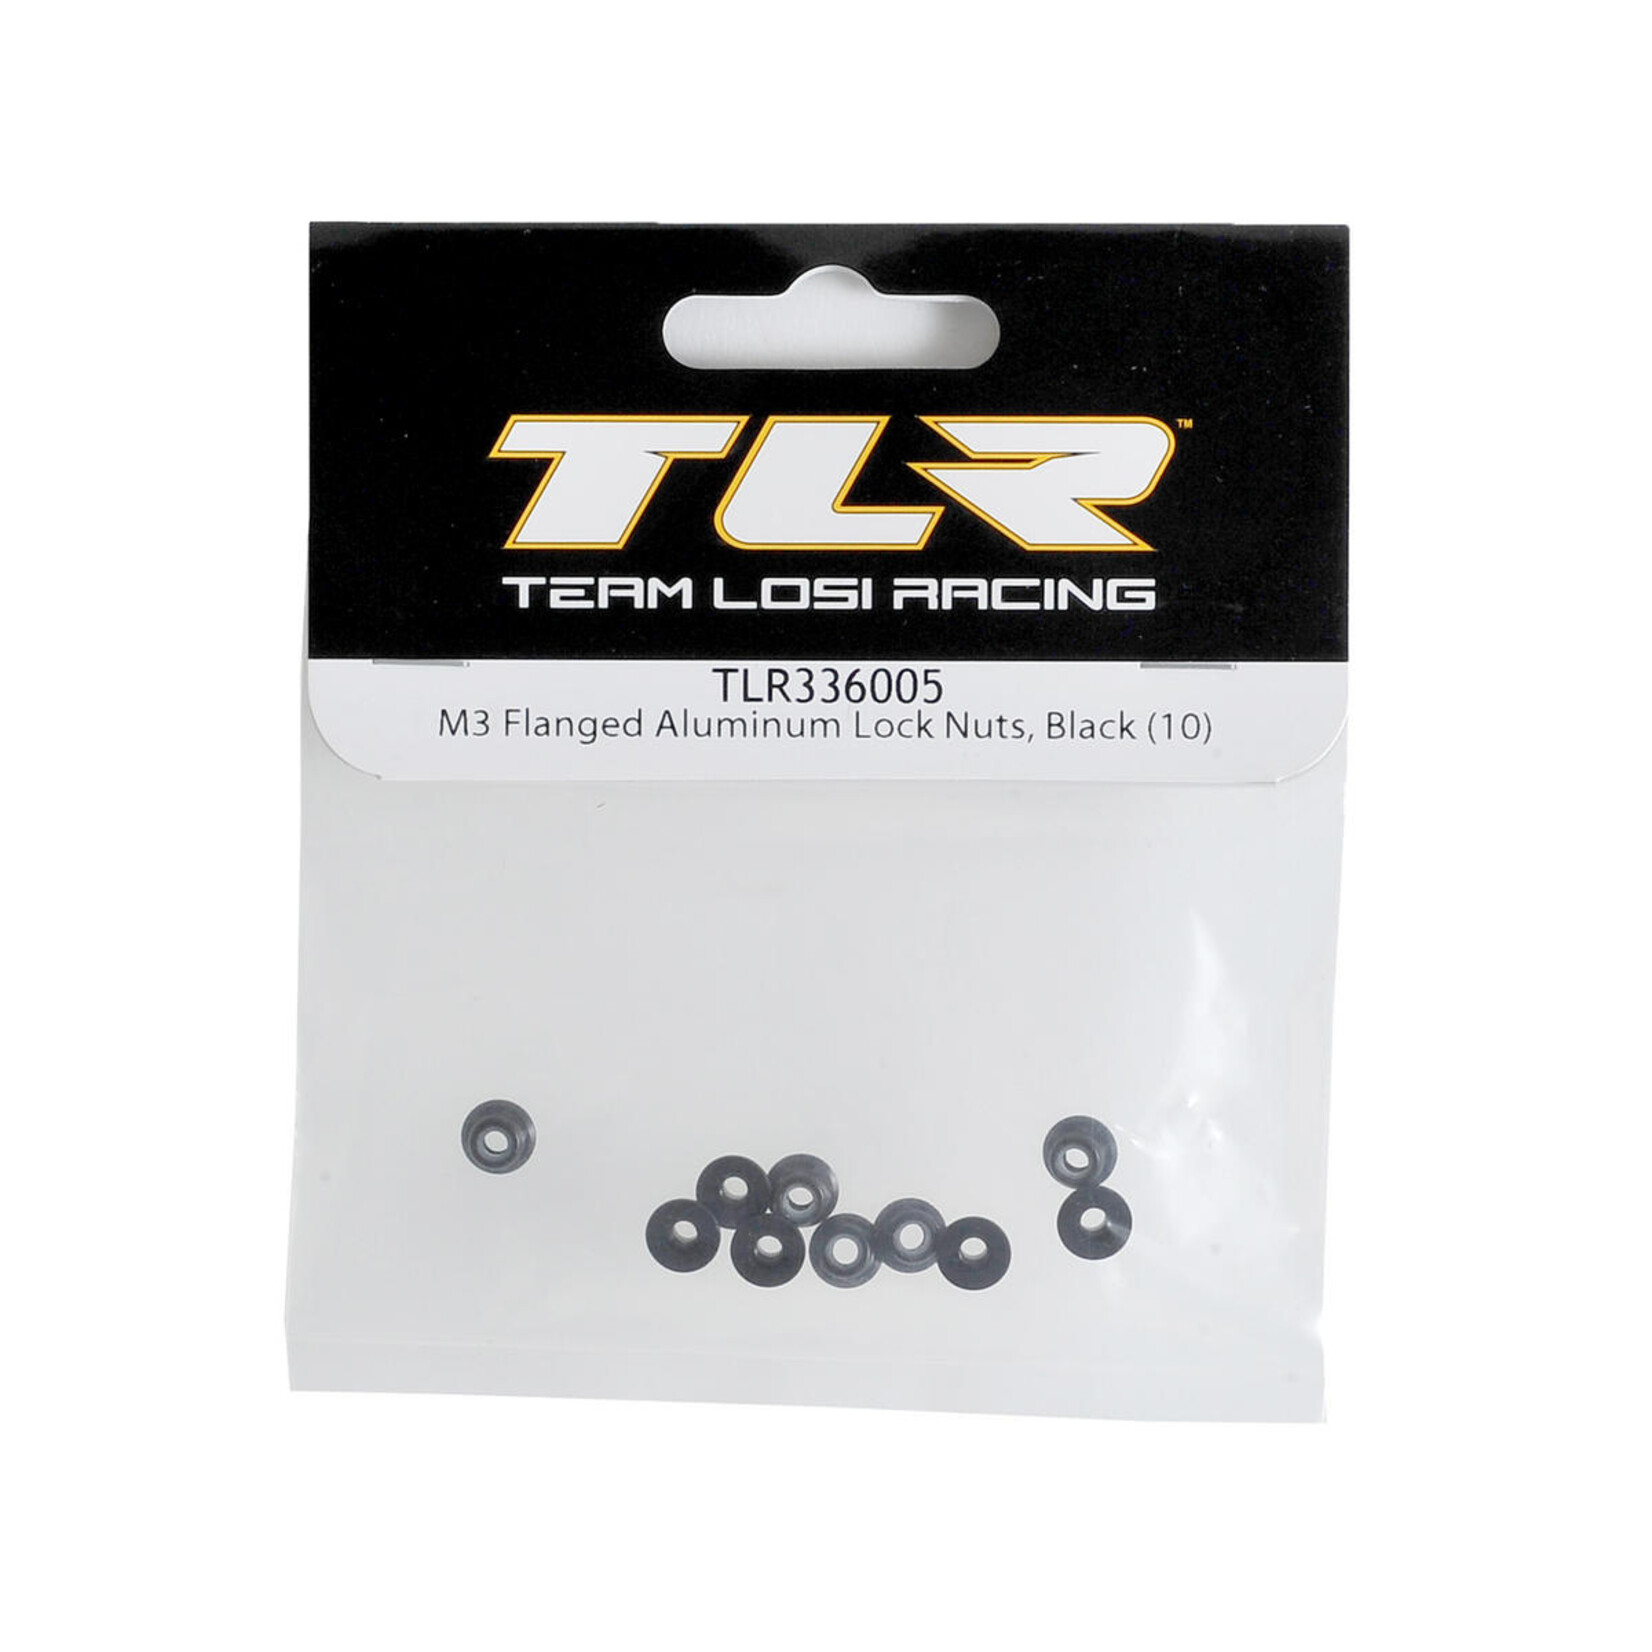 TLR Team Losi Racing 3mm Flanged Aluminum Locknuts (10) (Black) #TLR336005